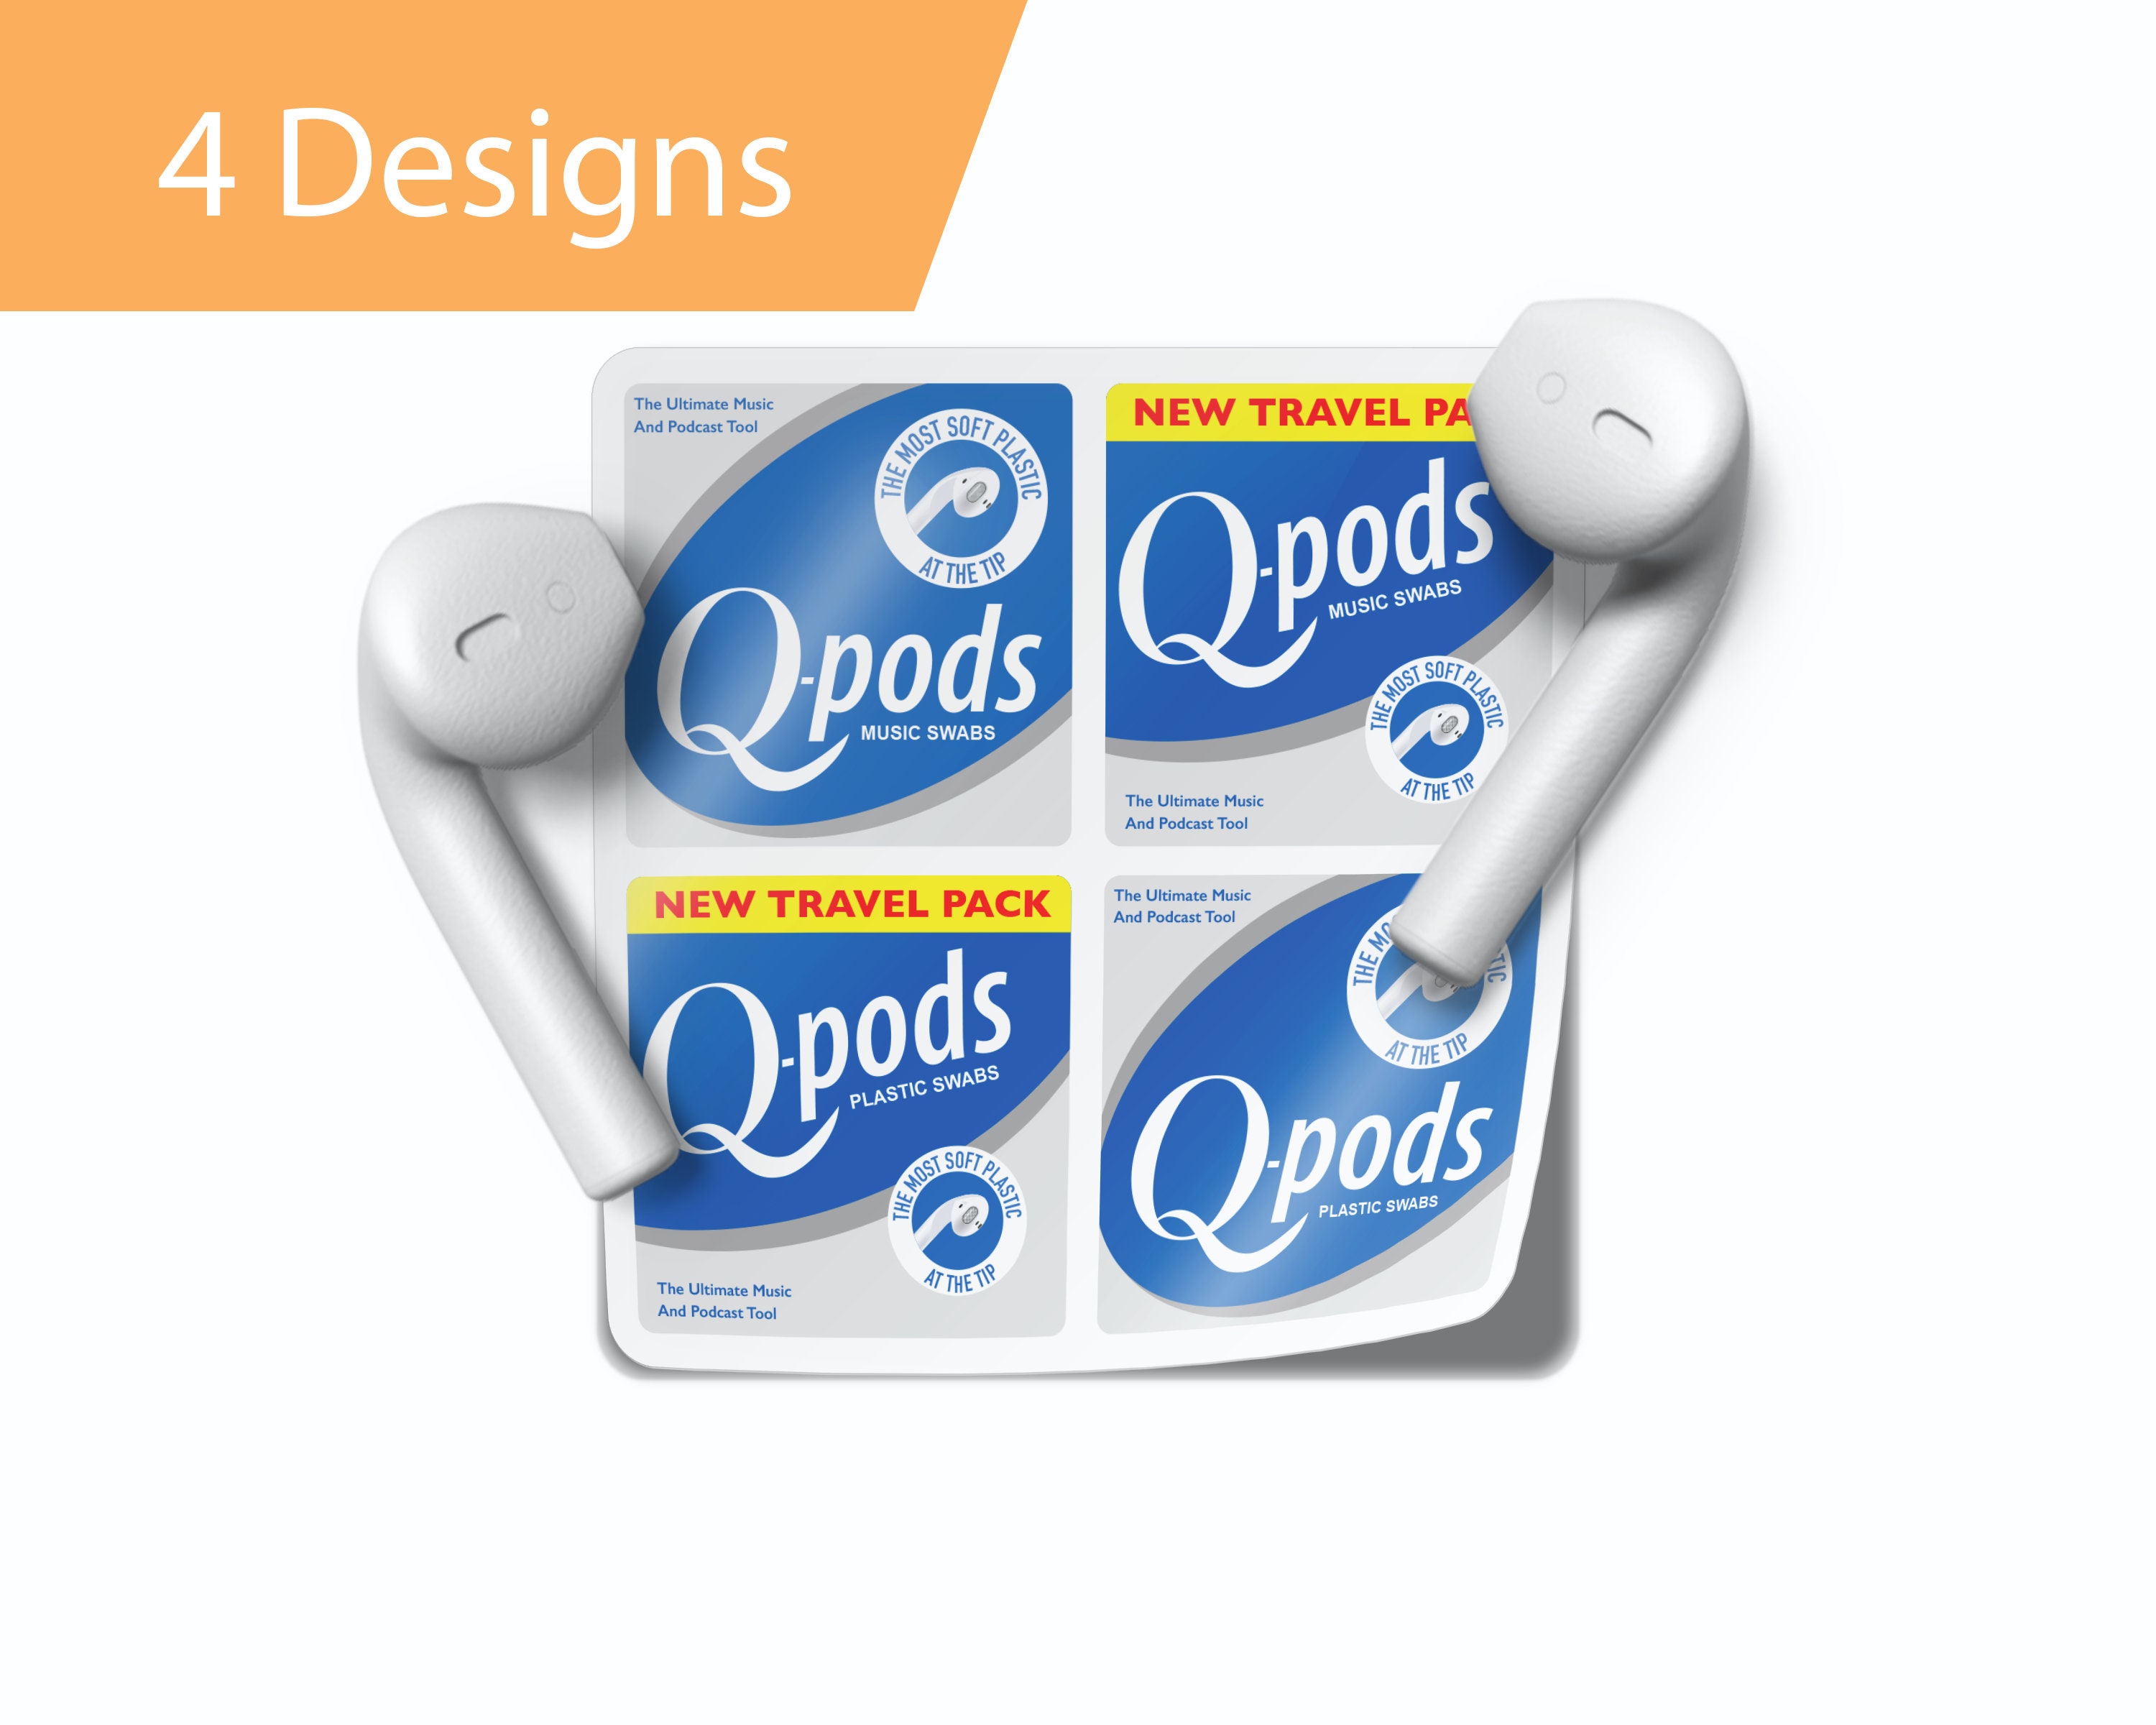 AirPod Case Skin Sticker - Q-Tip Qtip Disguise Airpods Wrap